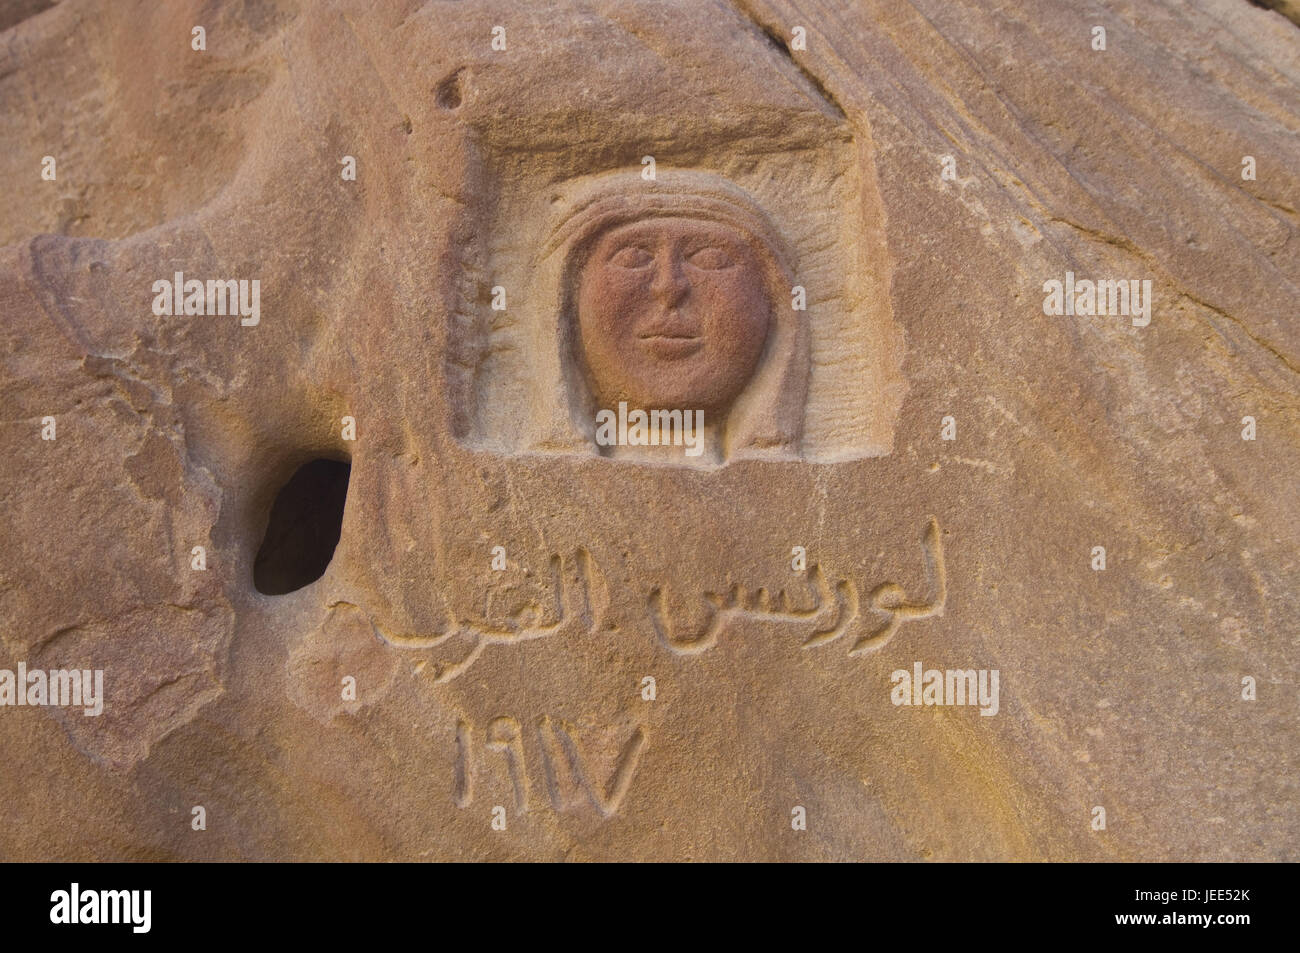 Picture of 'Lawrence von Arabien' chiseled in stone, wadi rum, Jordan, Stock Photo